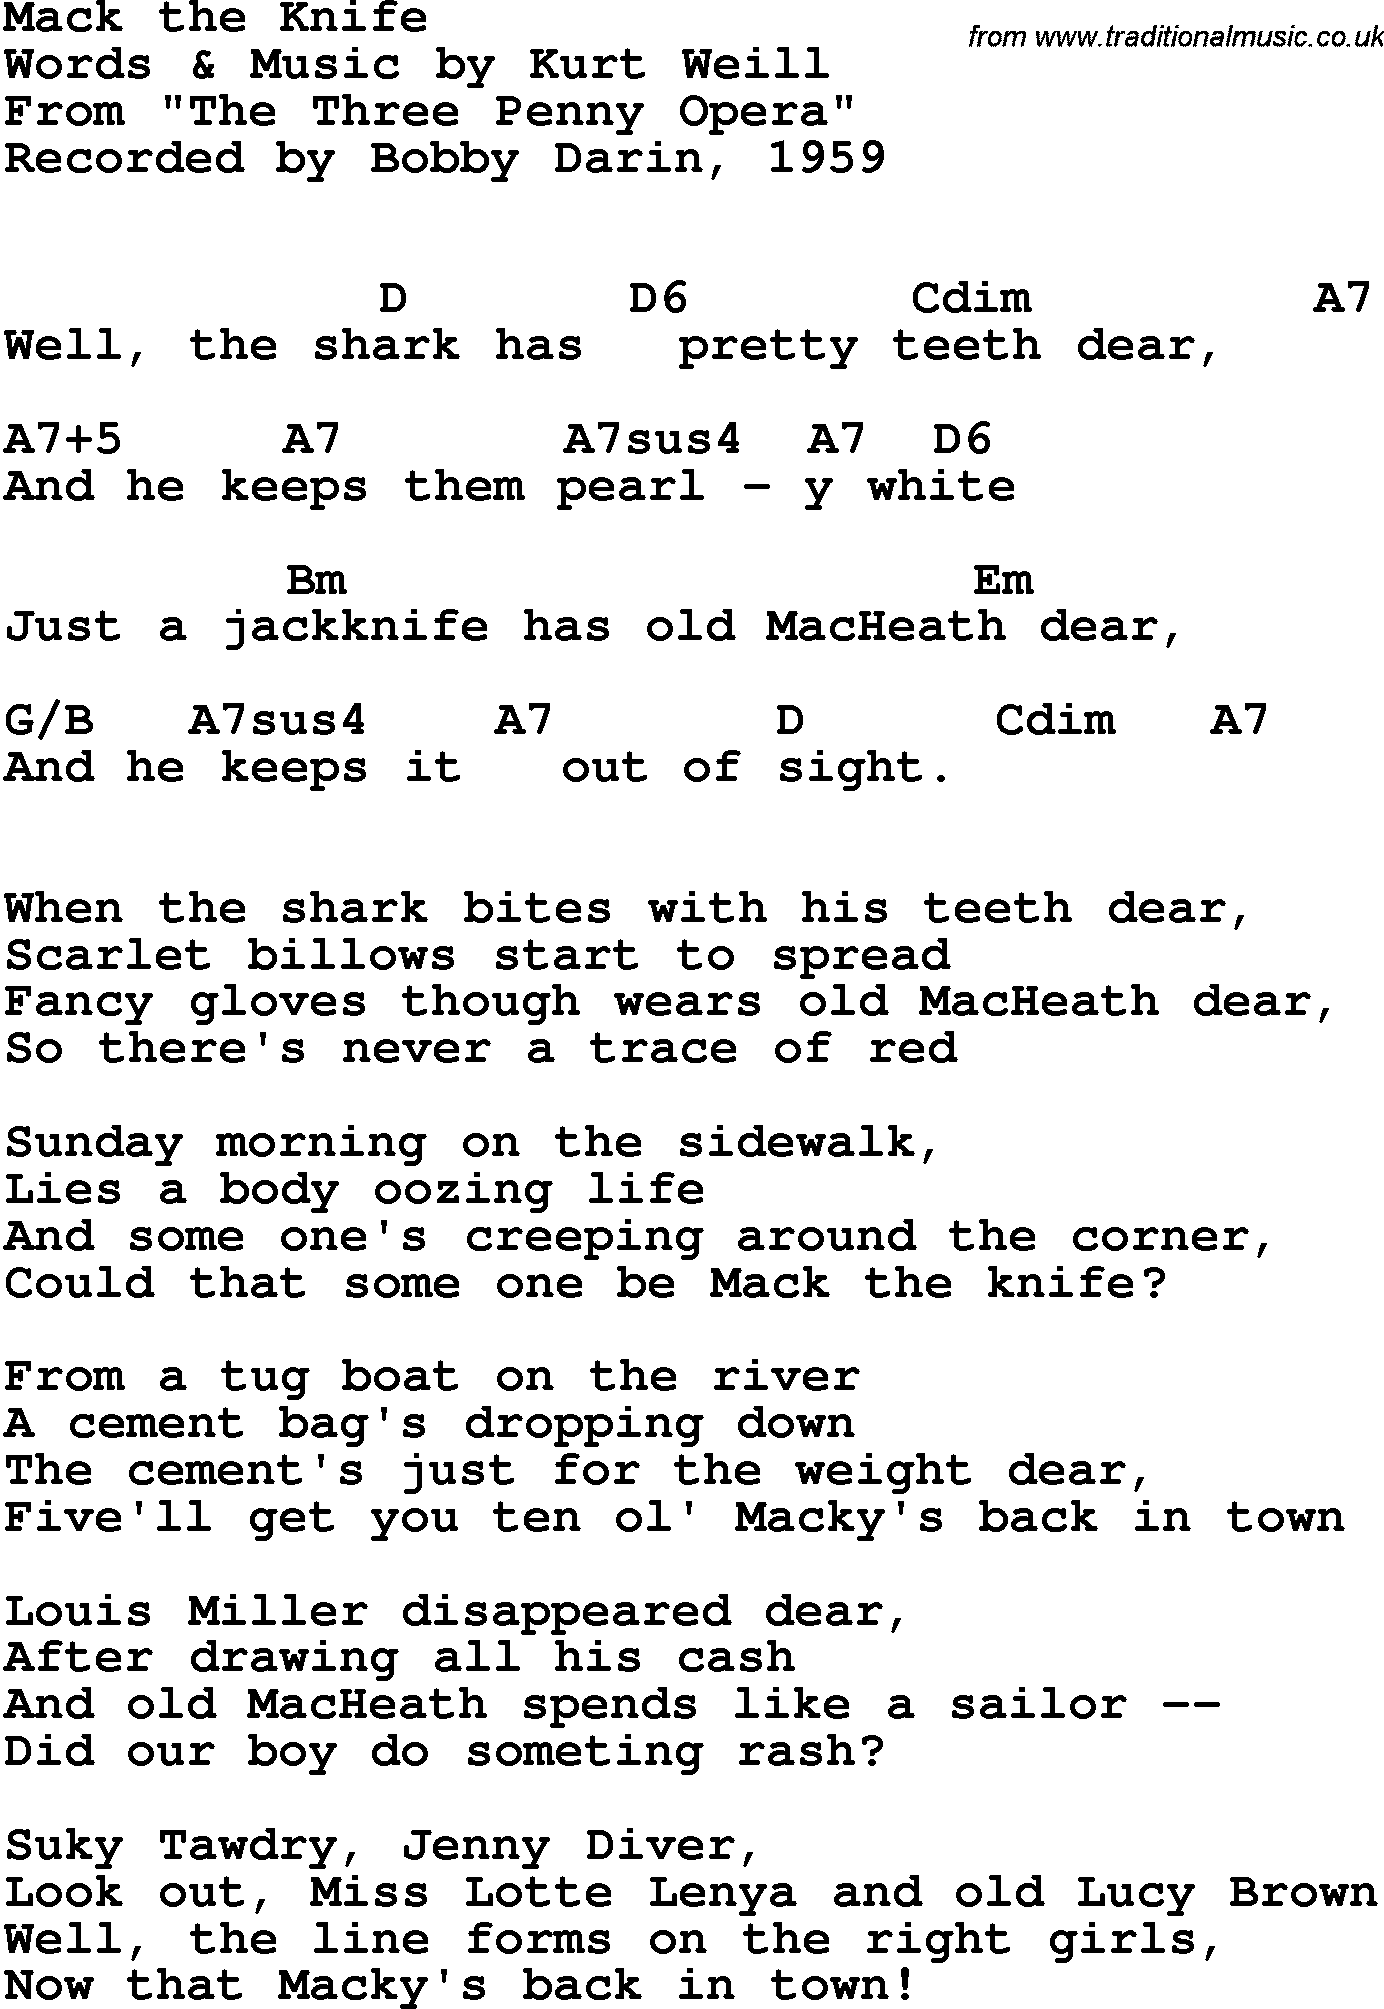 Song Lyrics with guitar chords for Mack The Knife (Moritat) - Bobby Darin, 1959